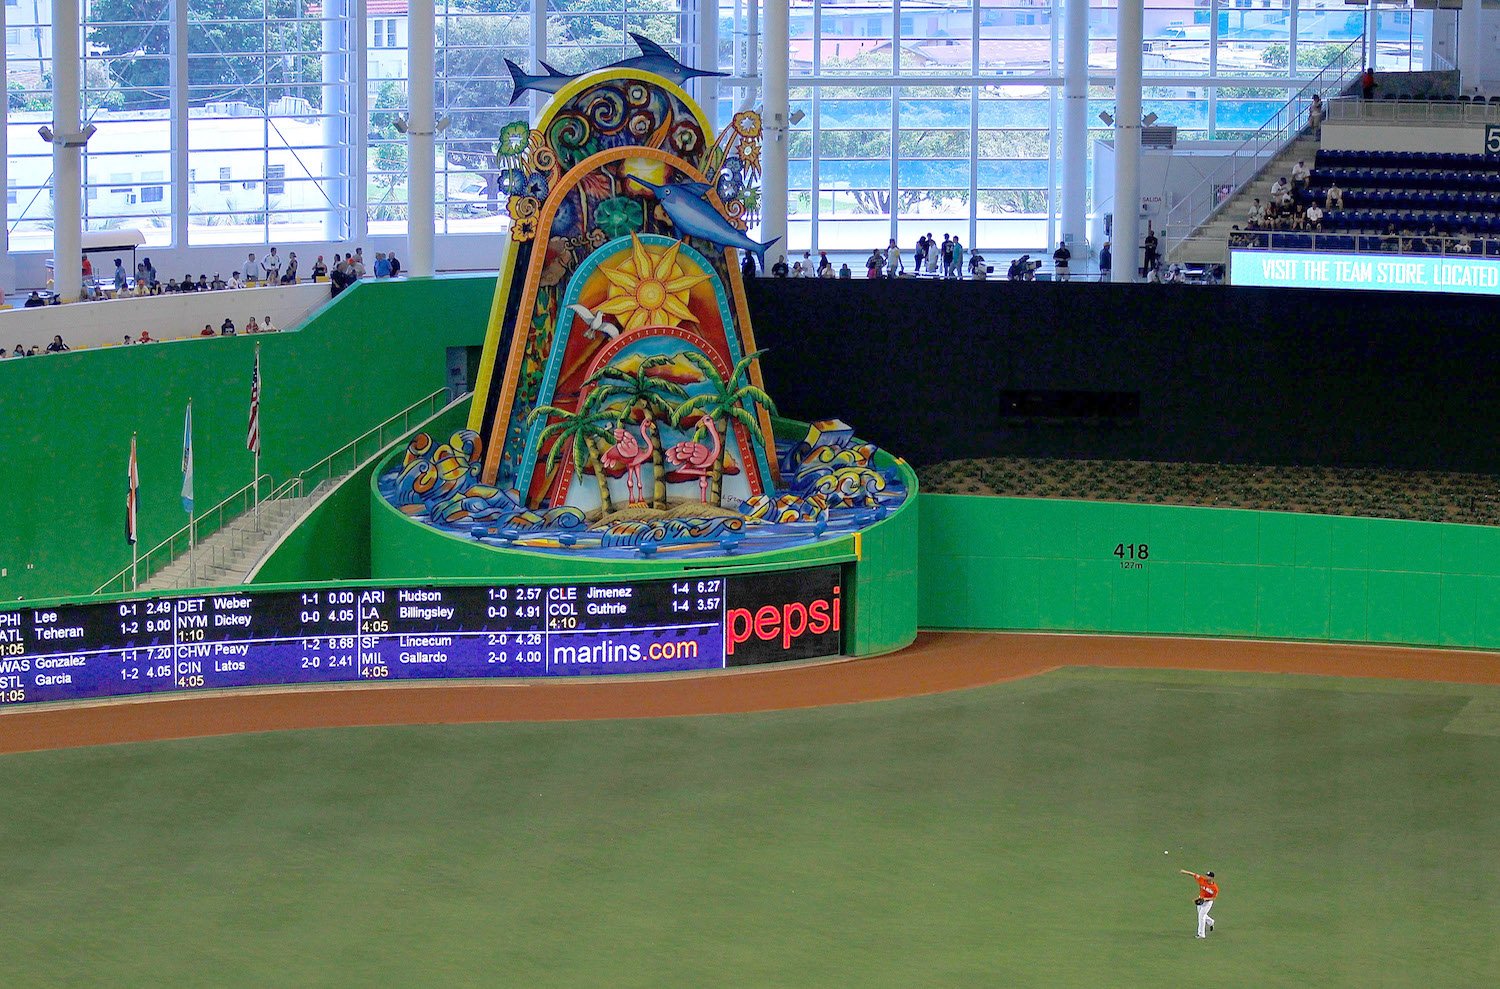 Miami Baseball Stadium Address Shirt in Marlins Colors 